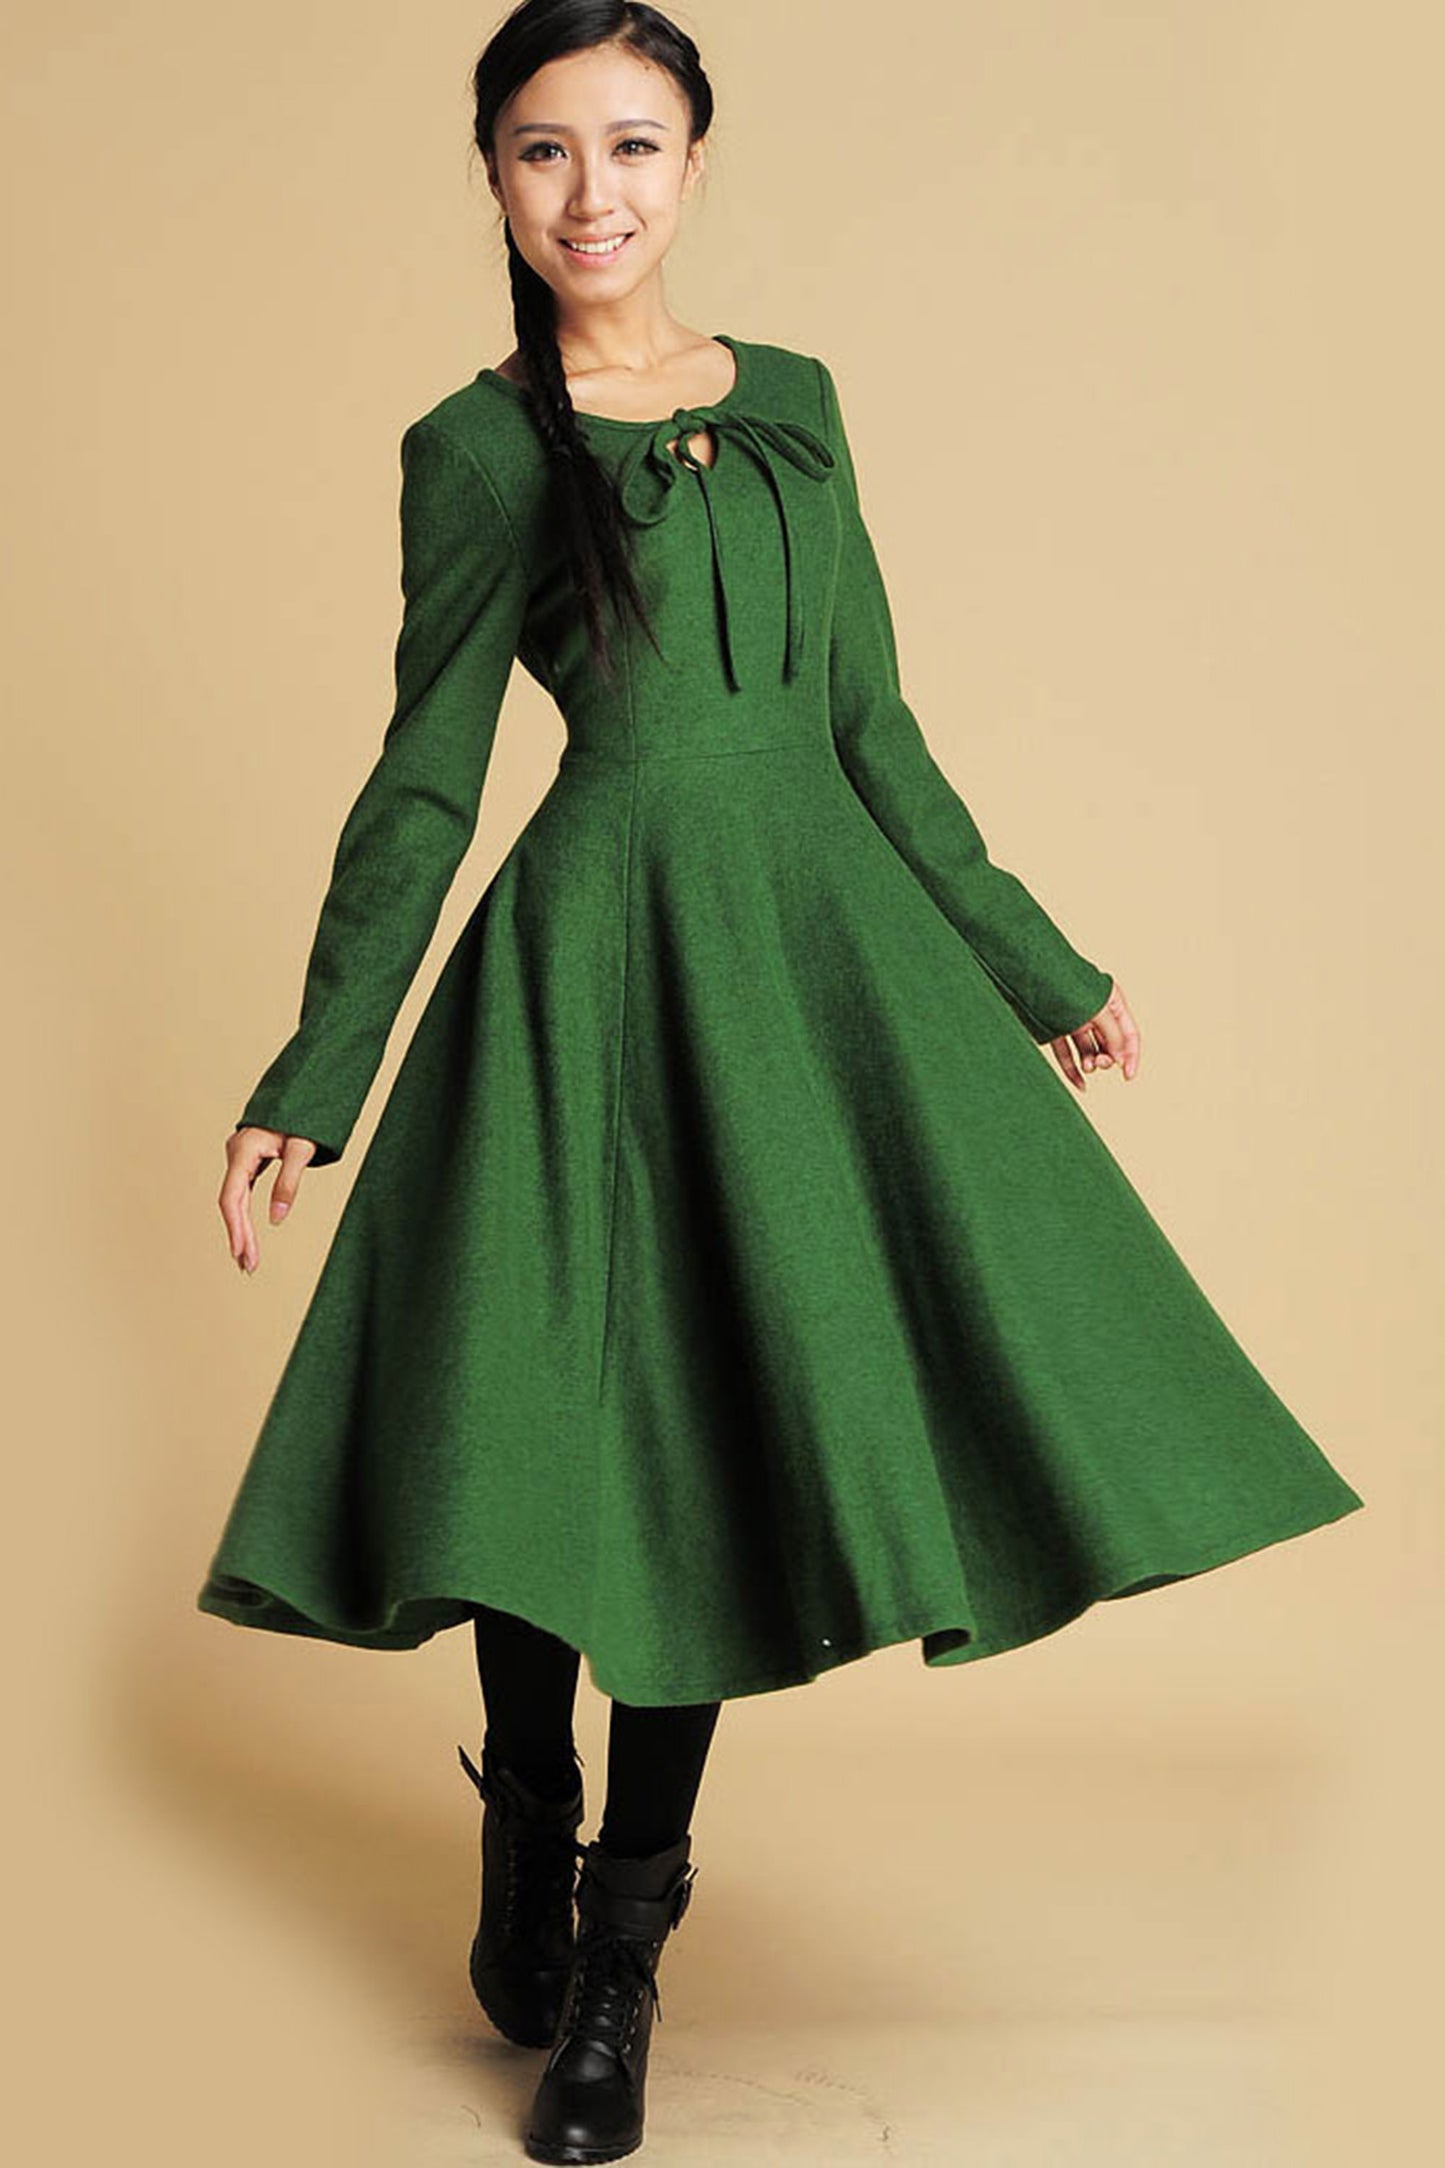 Green dress maxi wool dress with keyhole detail (374)